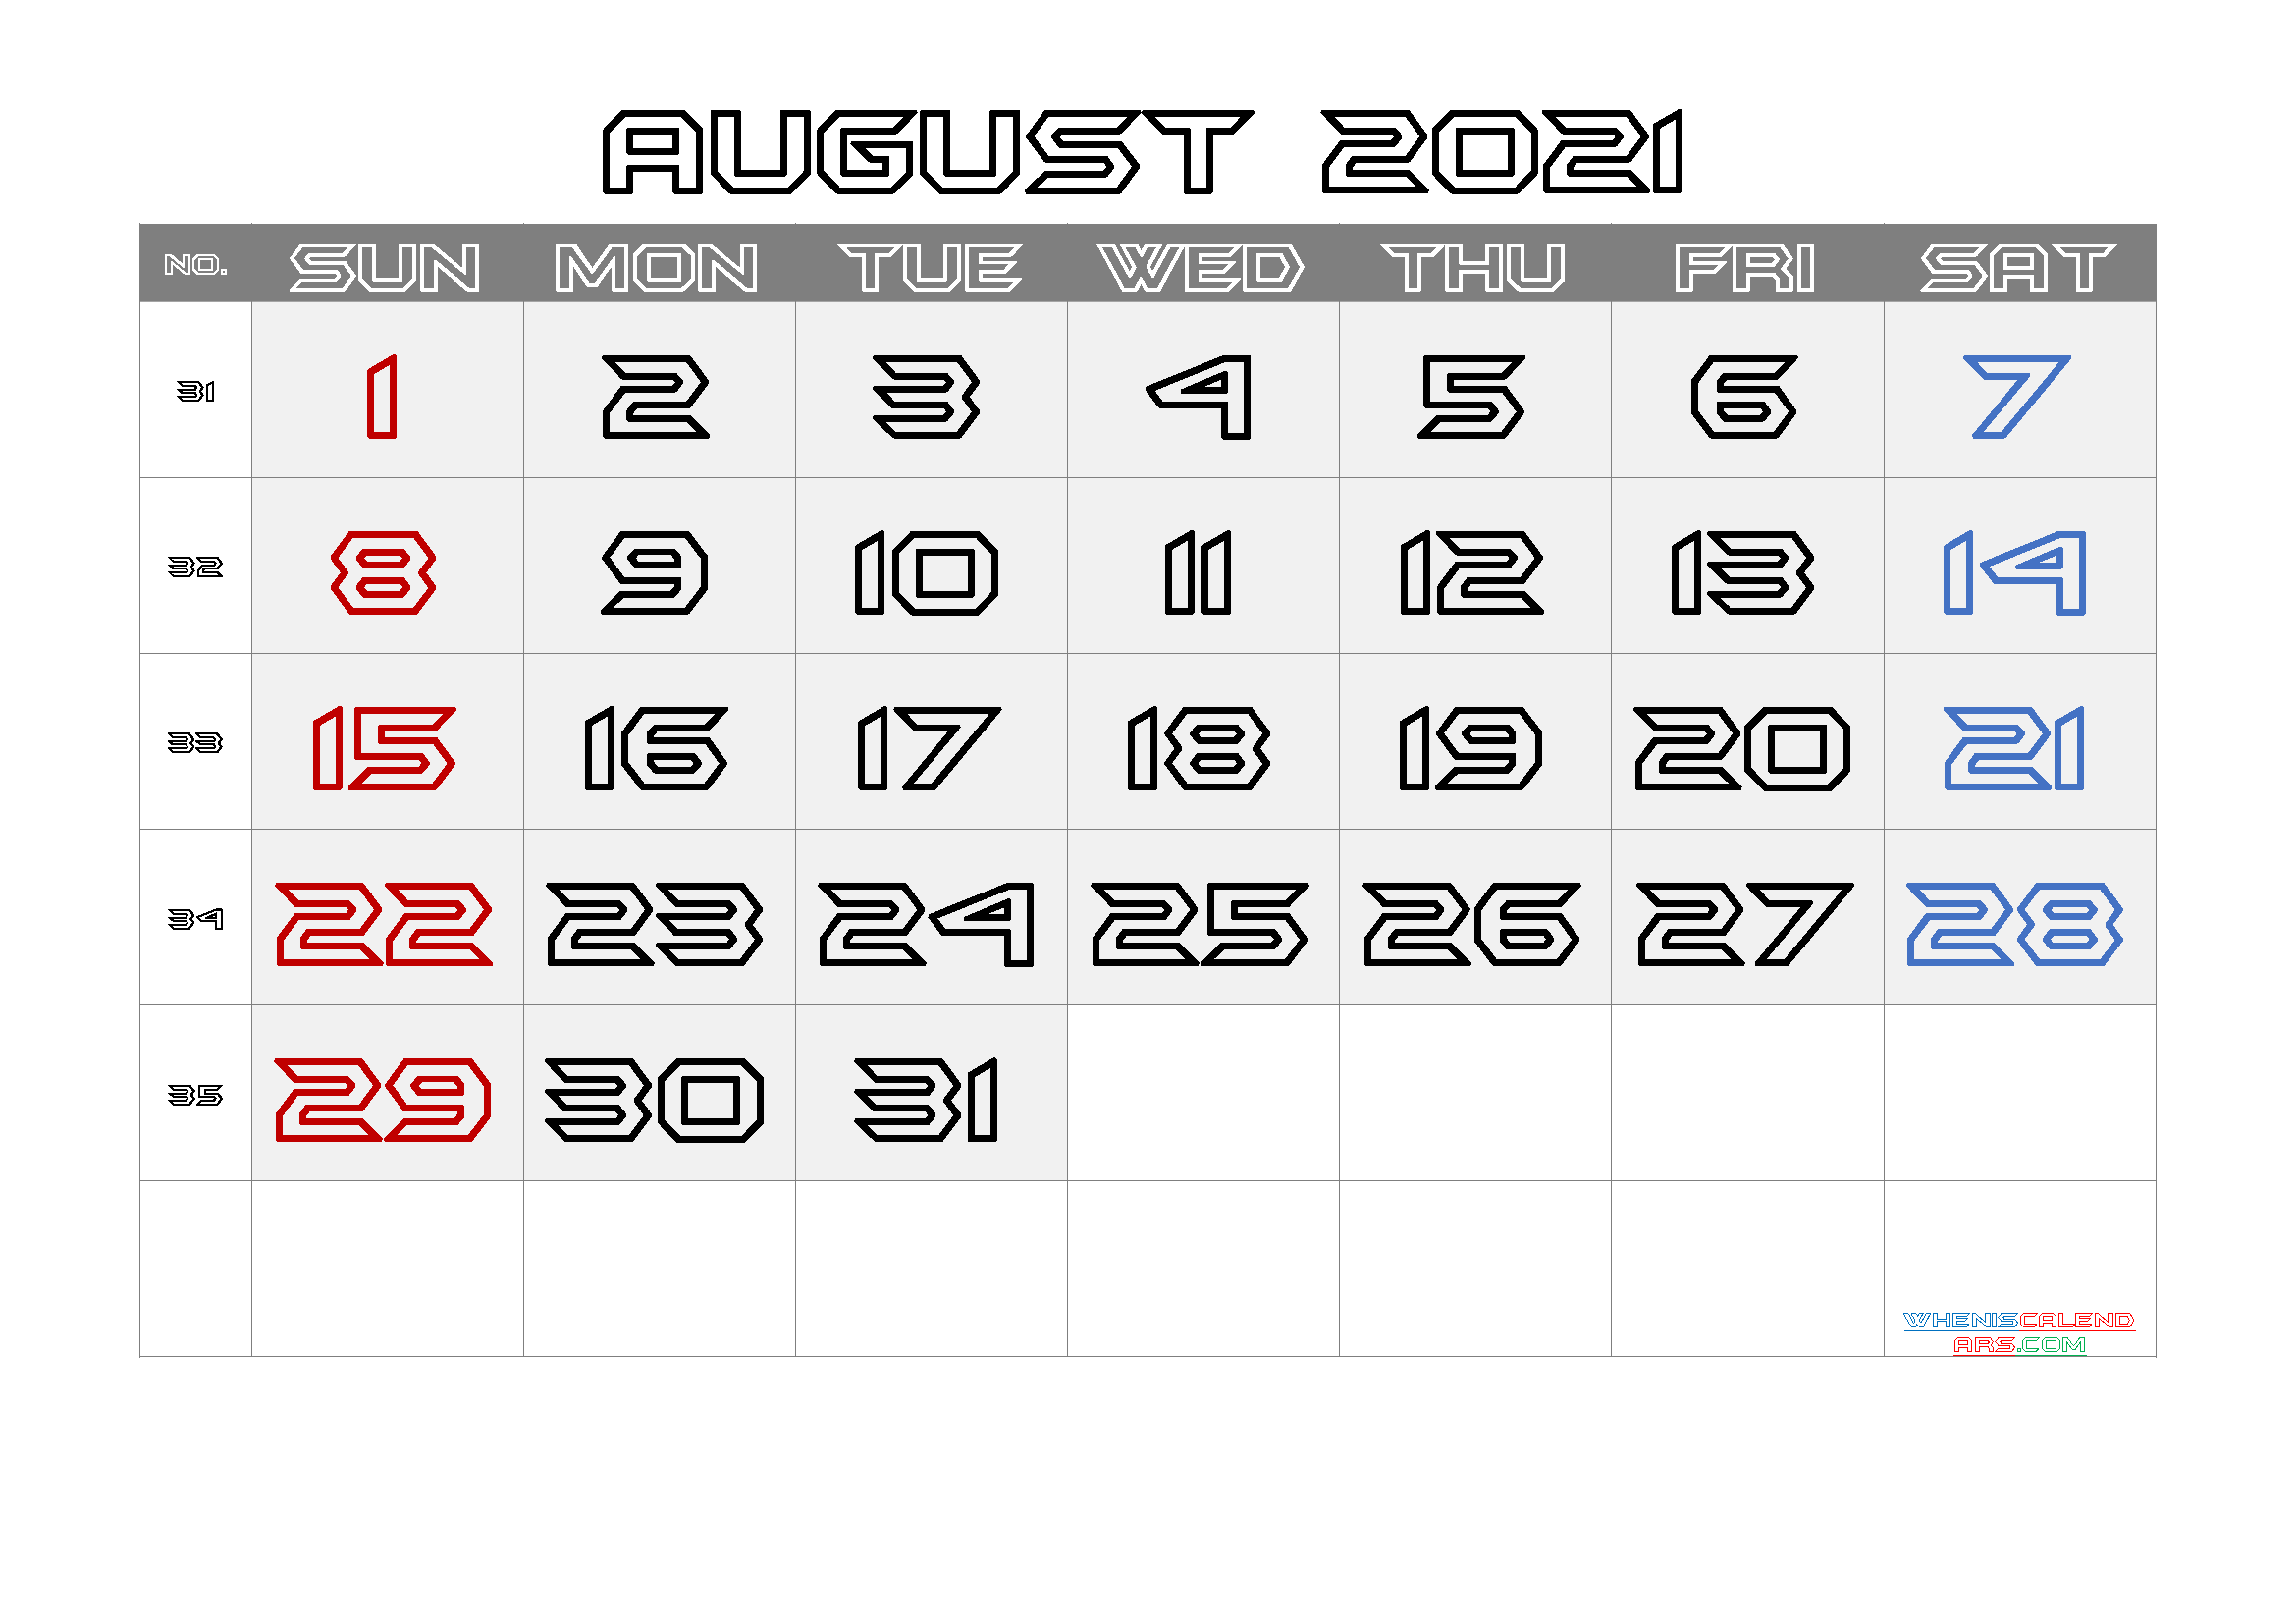 Printable August 2021 Calendar